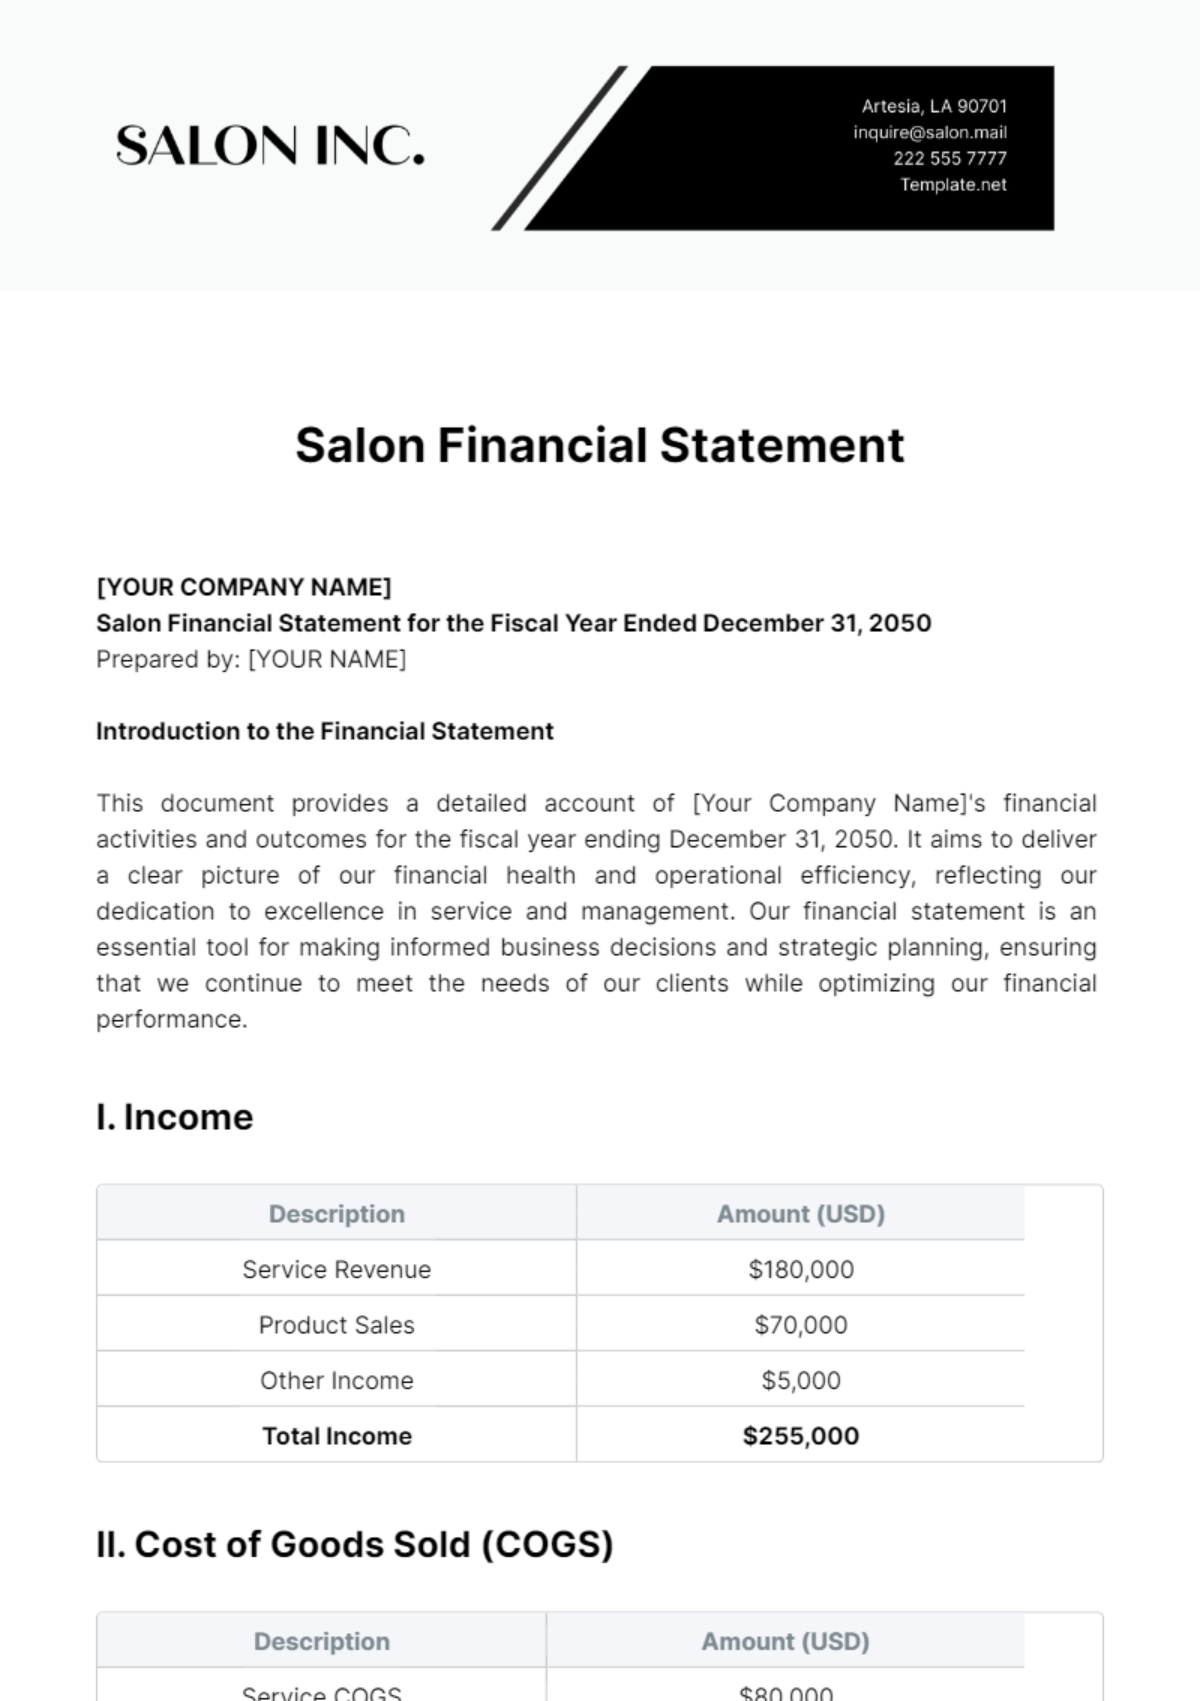 Salon Financial Statement Template